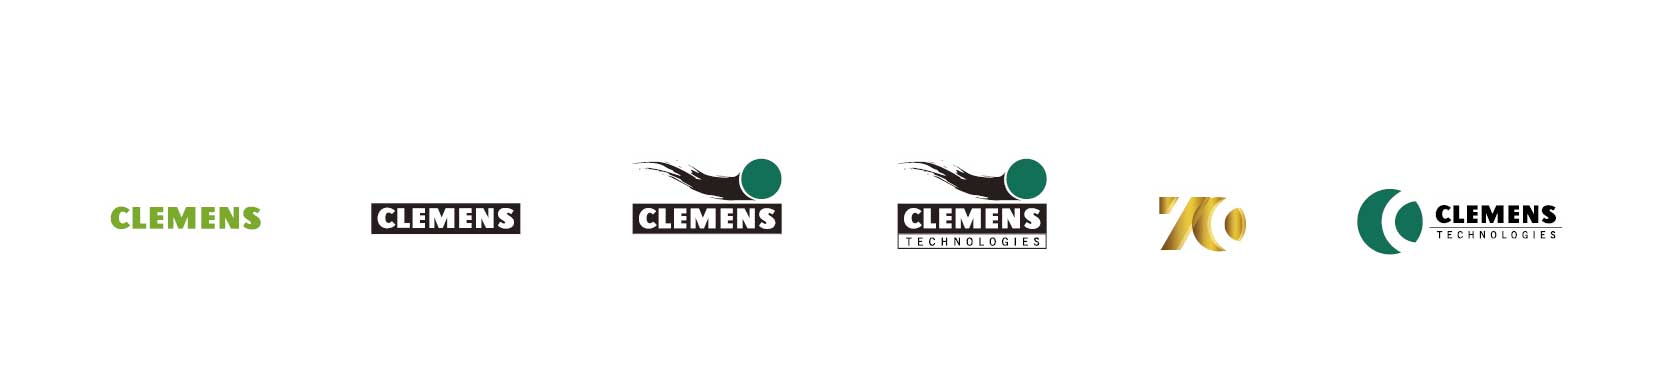 CLEMENS Technologies Desarrollo del logotipo